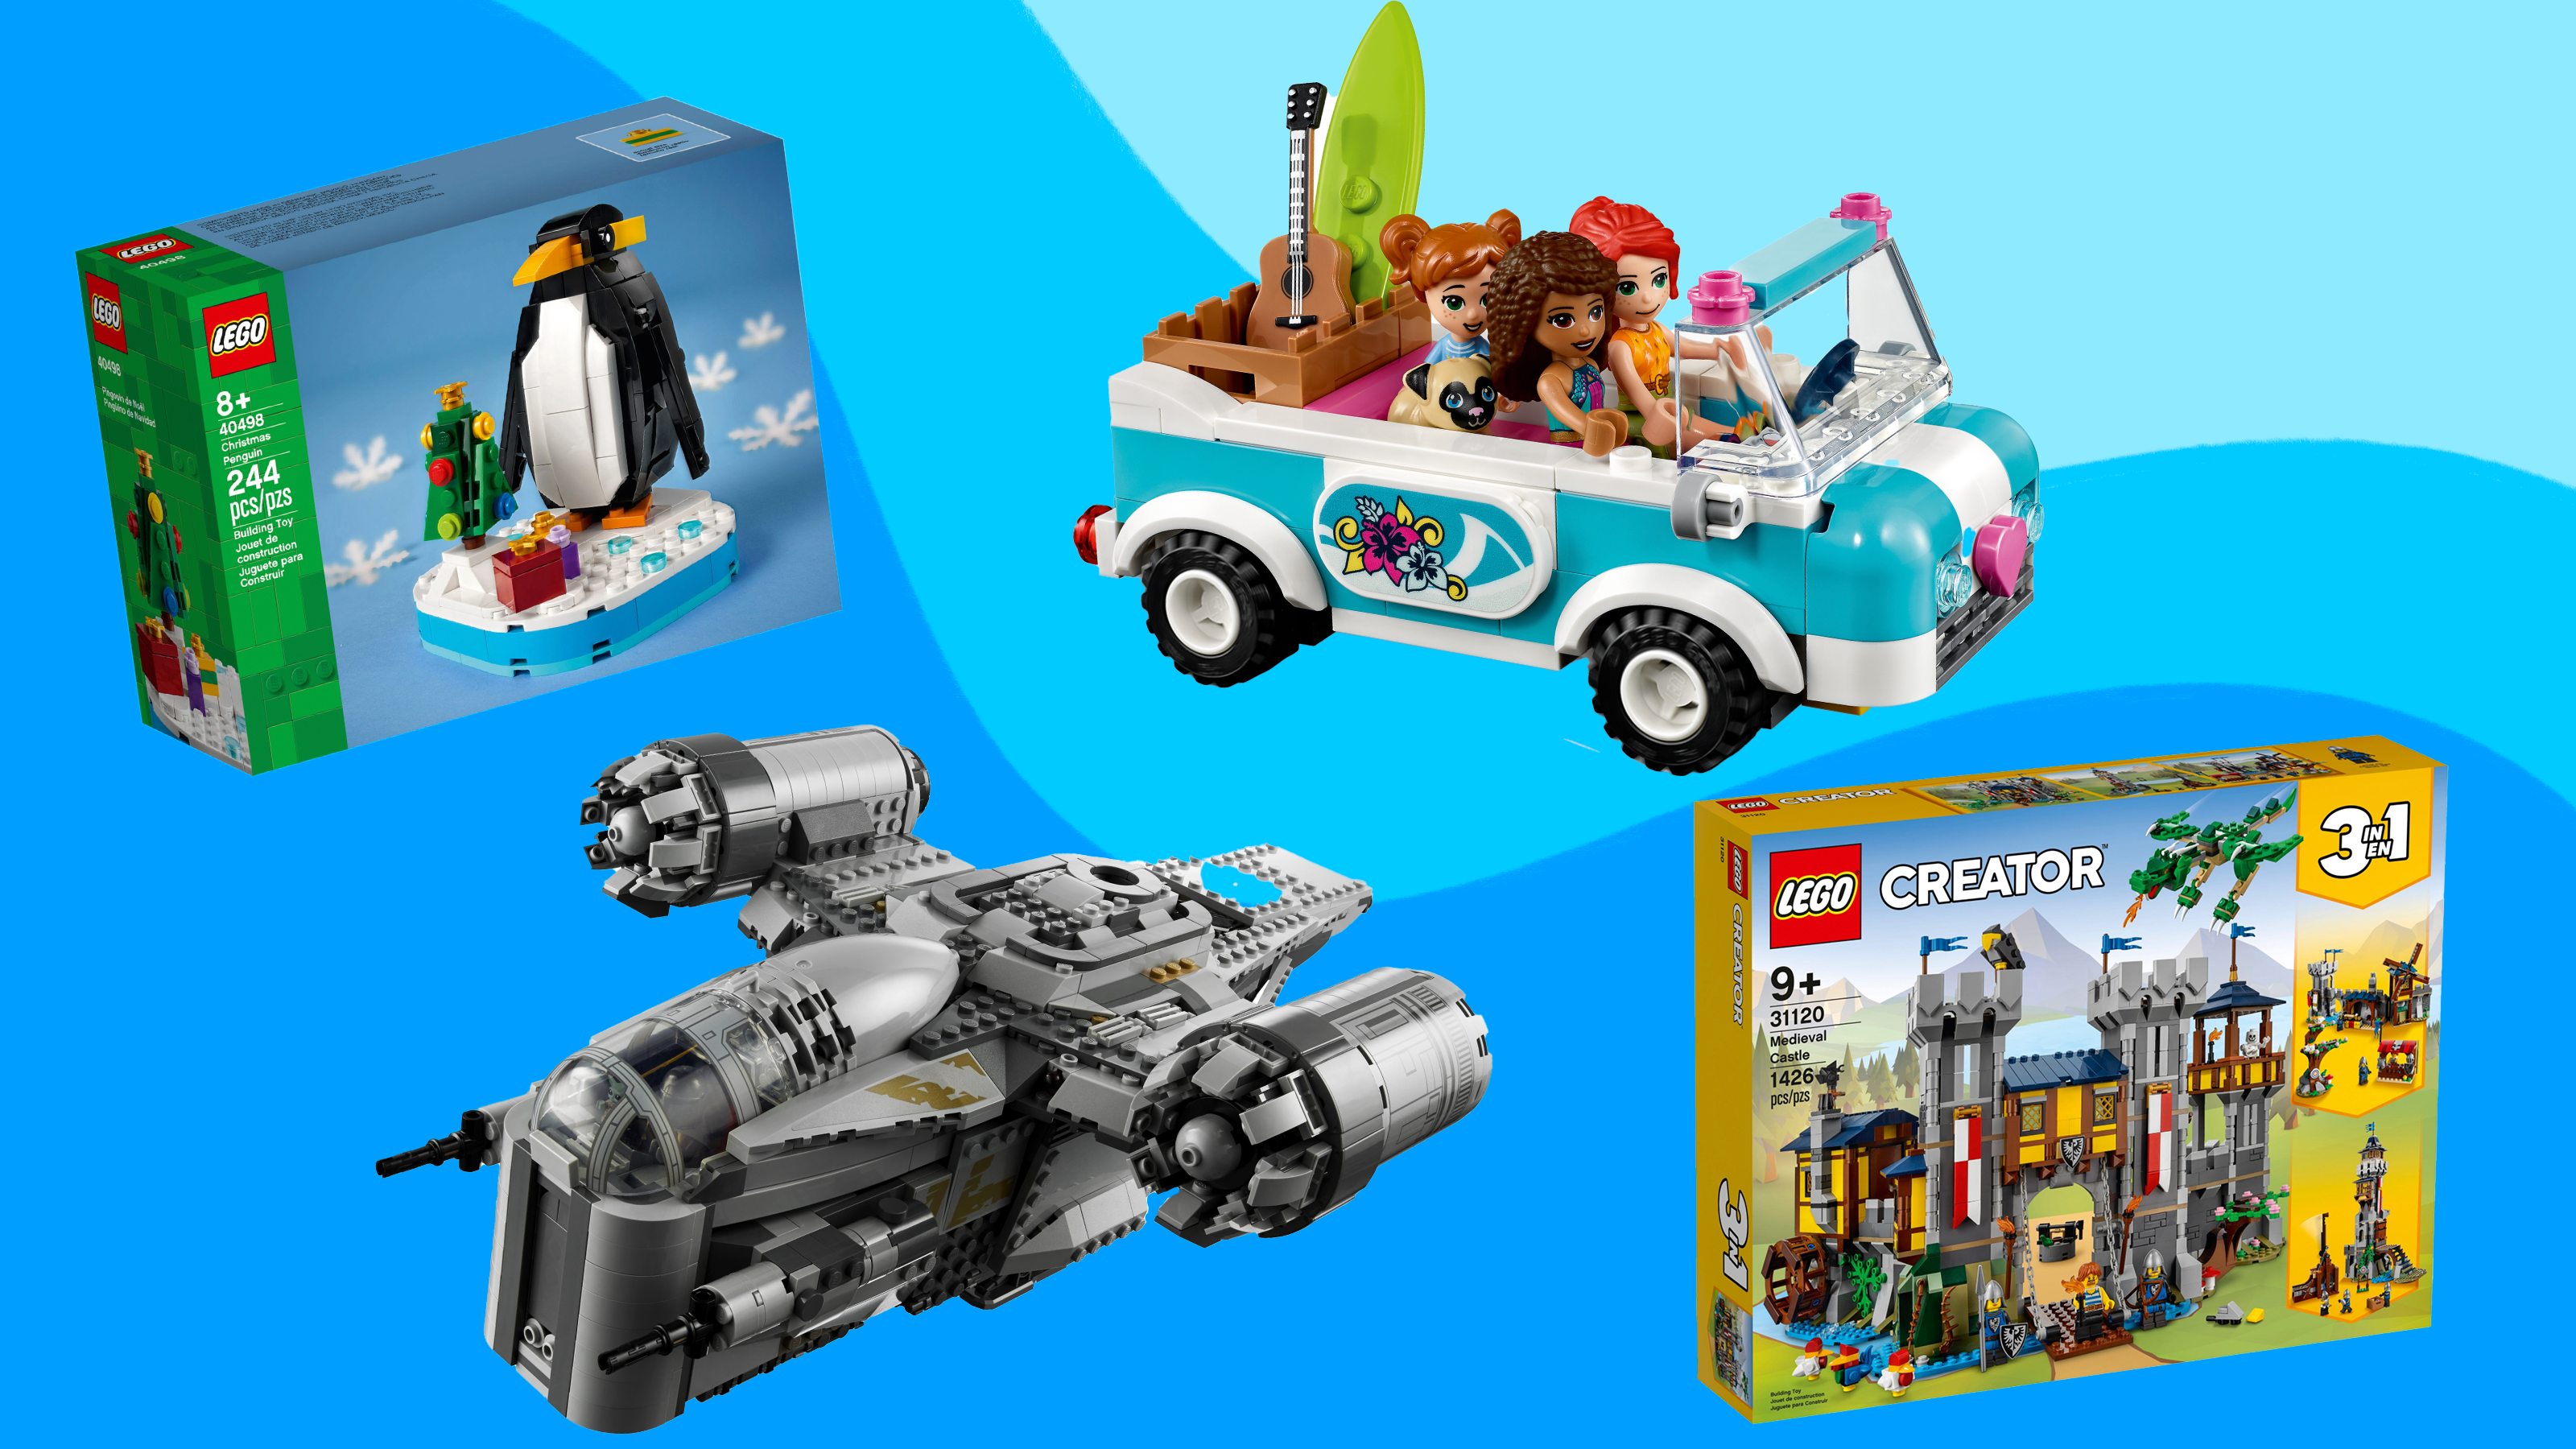 Lego sets for kids: Star Wars, Mario, Harry Potter